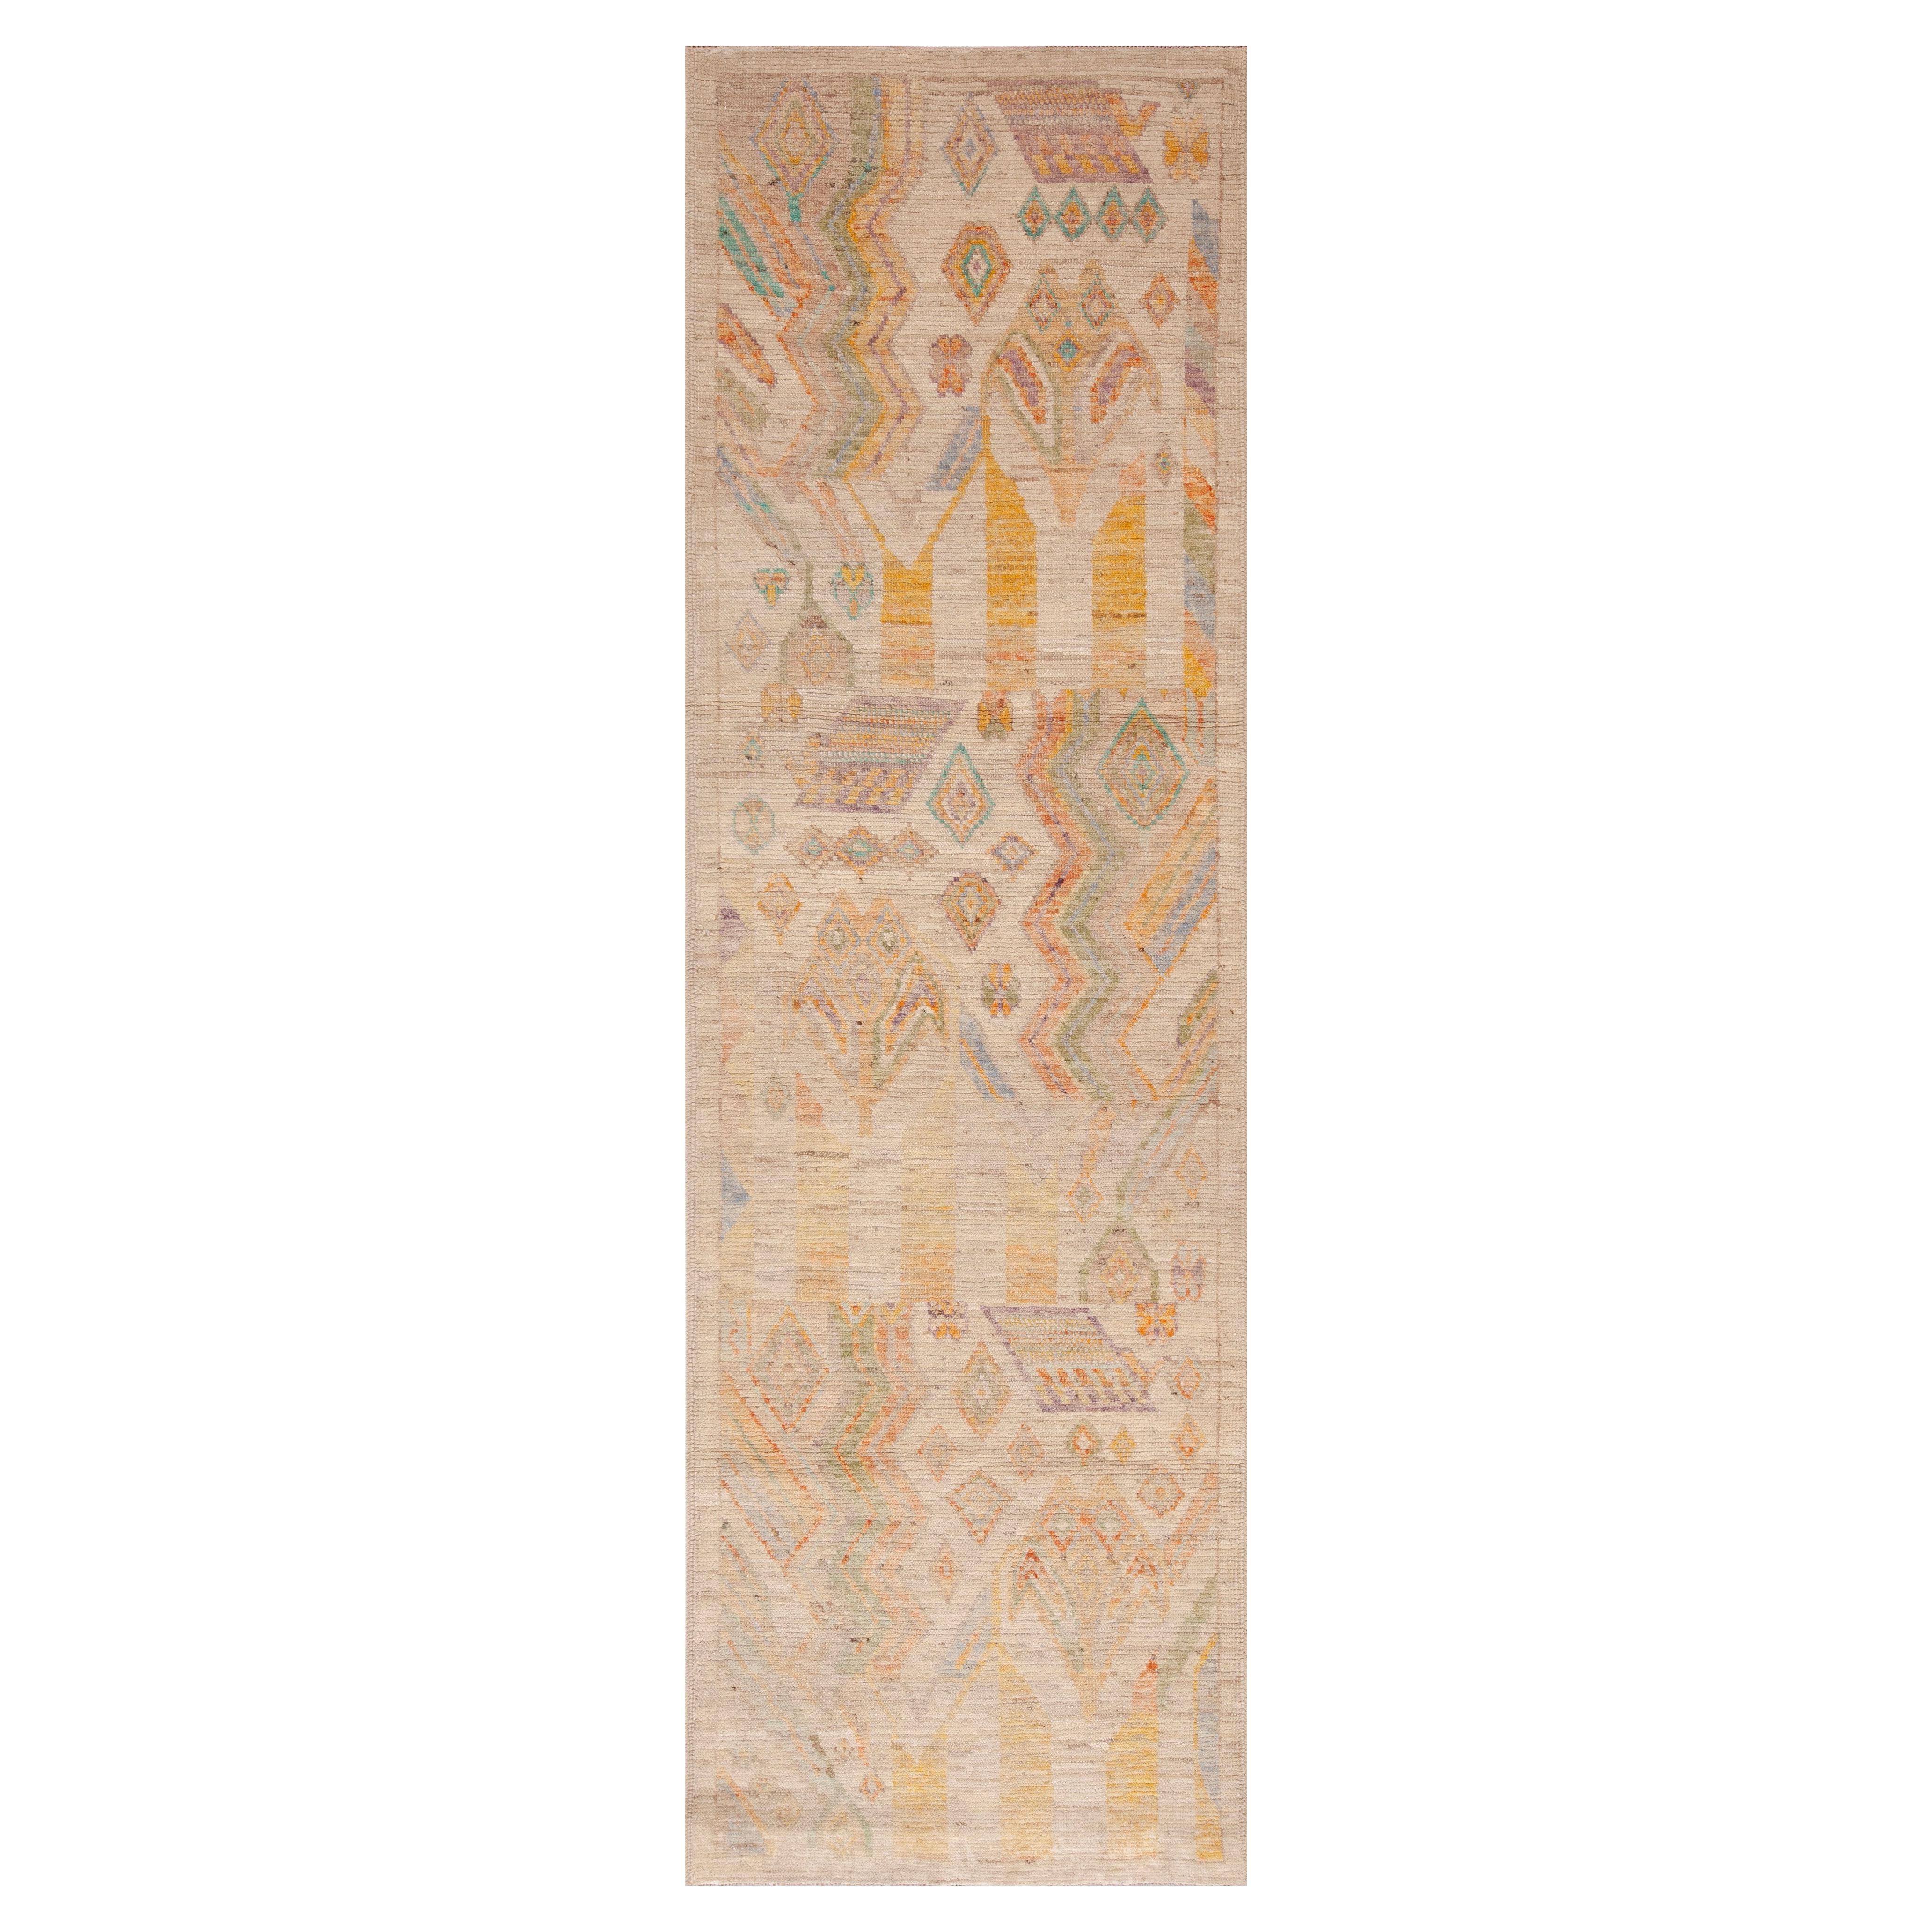 Nazmiyal Collection Tribal Nomadic Light Ivory Color Modern Runner Rug 3' x 9'9" For Sale